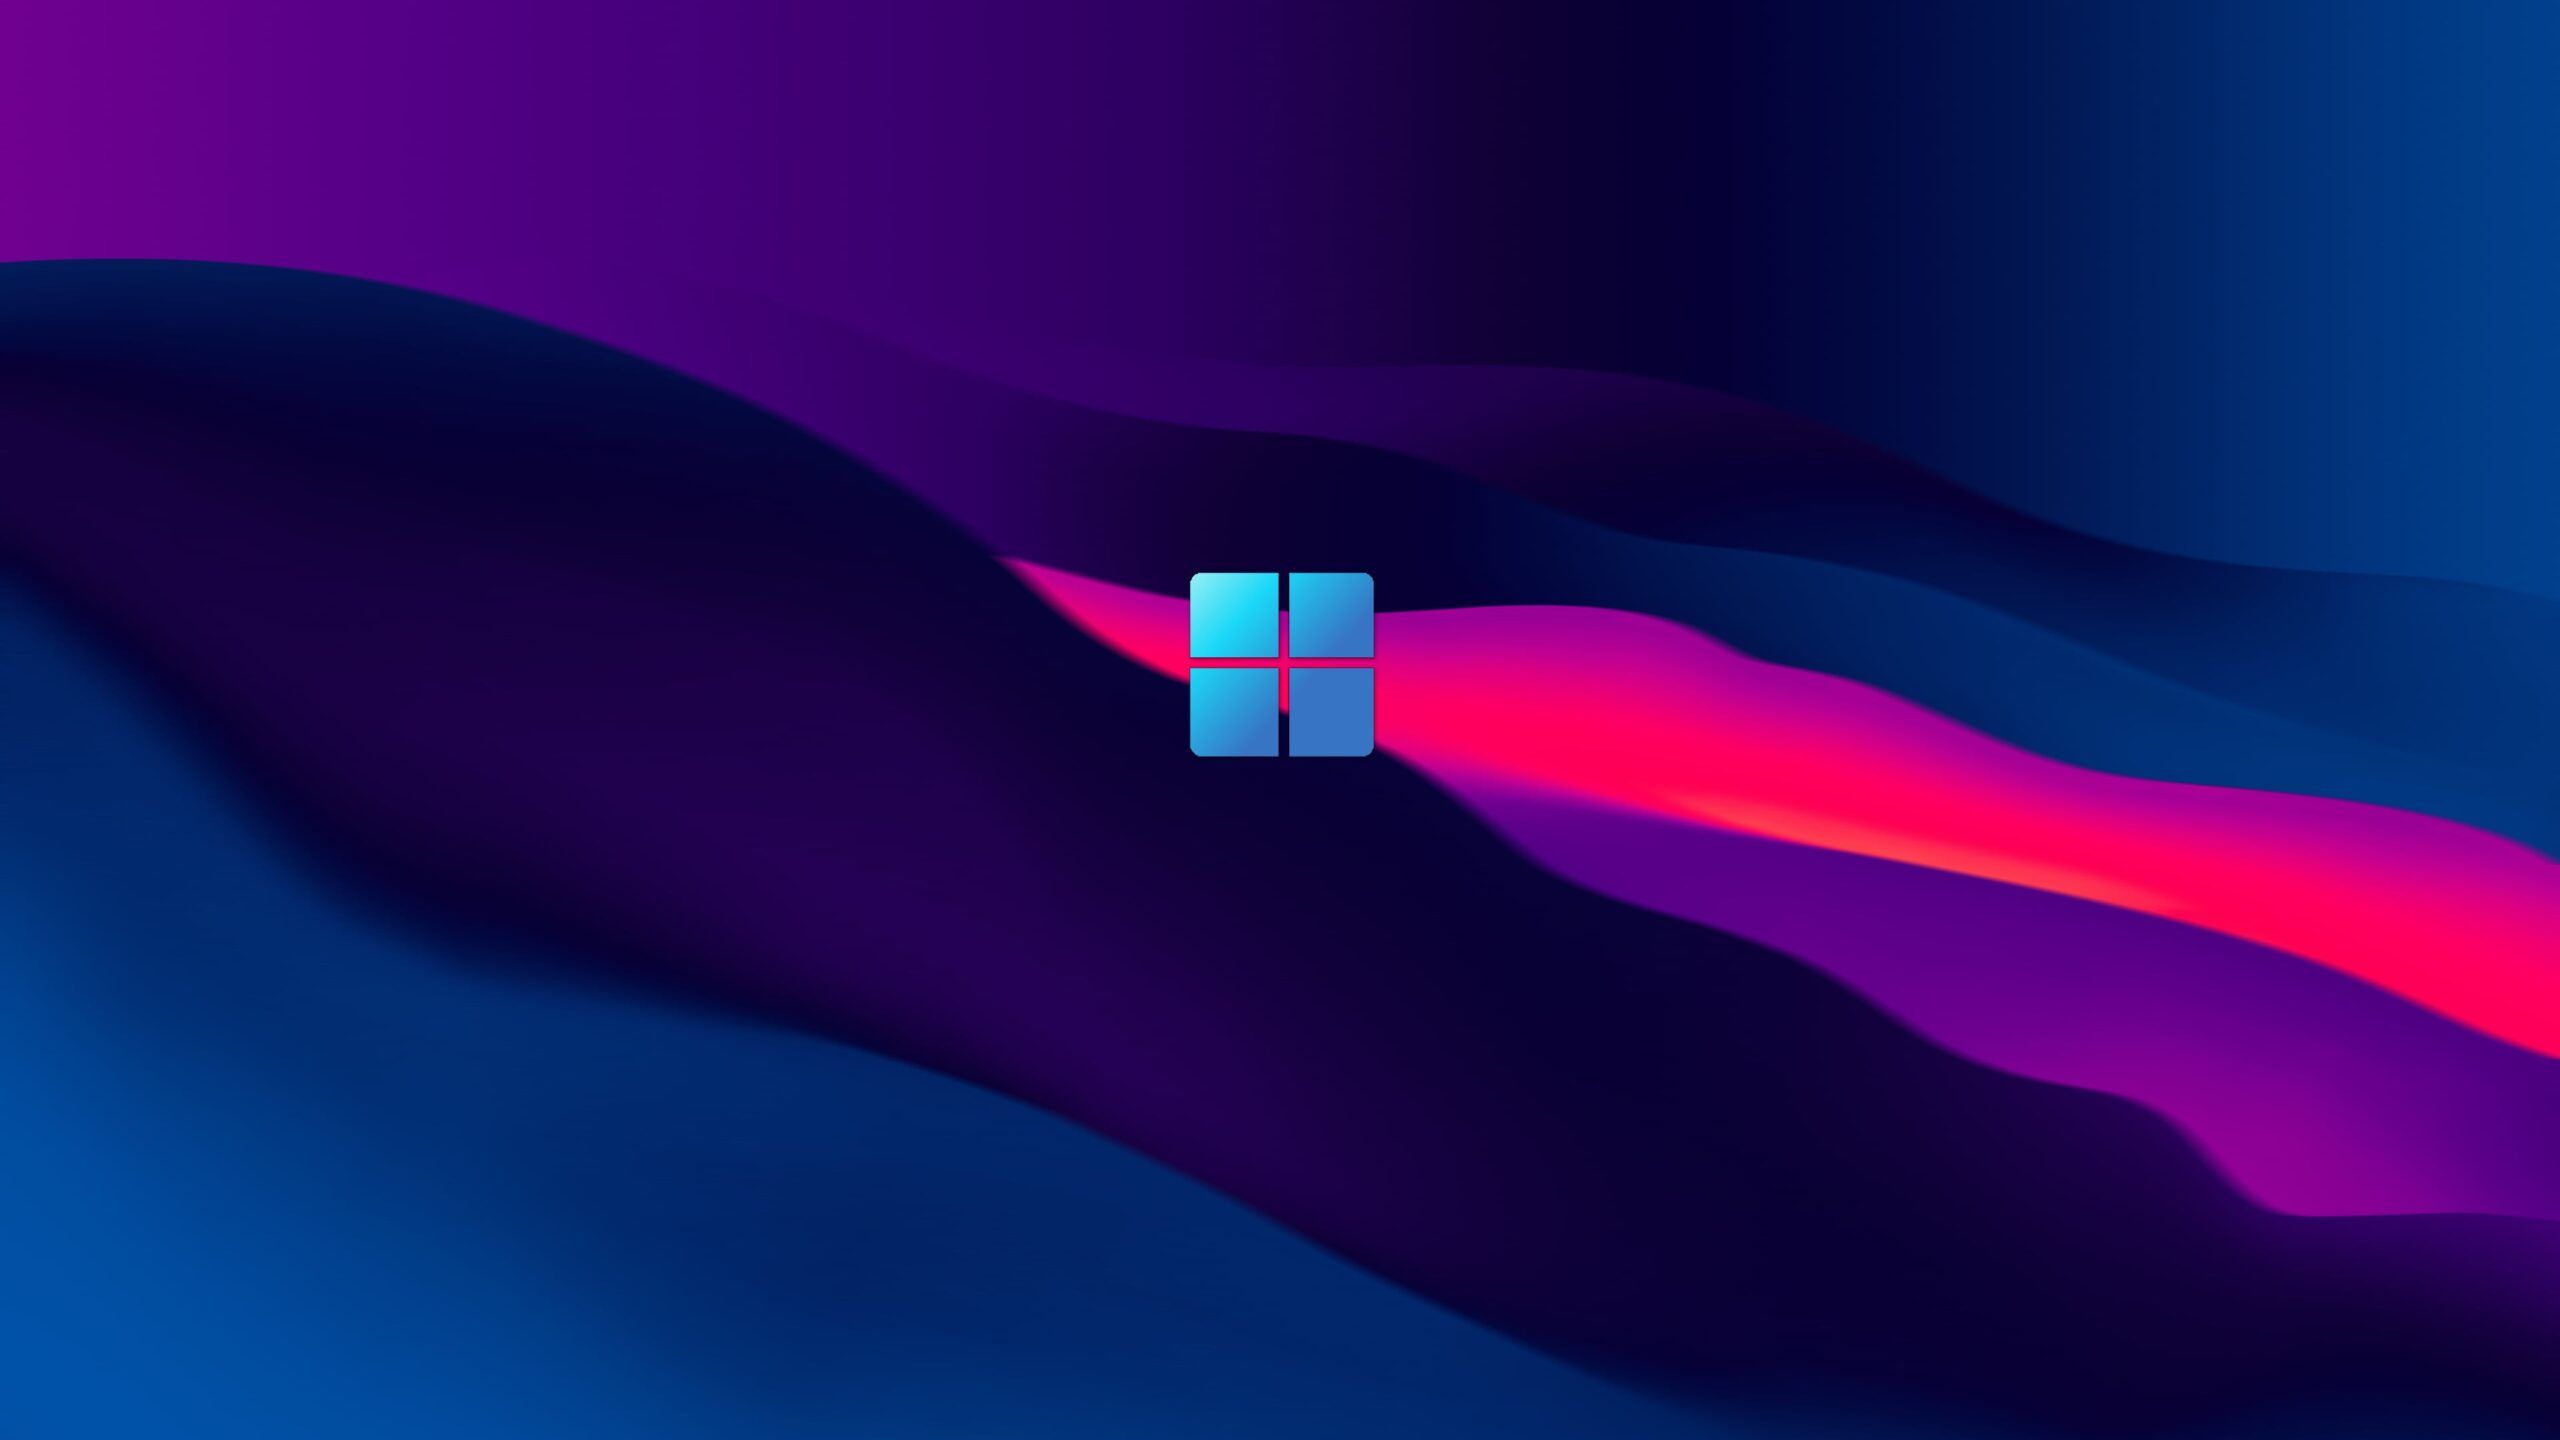  Windows 11 Hintergrundbild 2560x1440. Best Windows 11 4k Wallpaper [ Ultra 4k ]